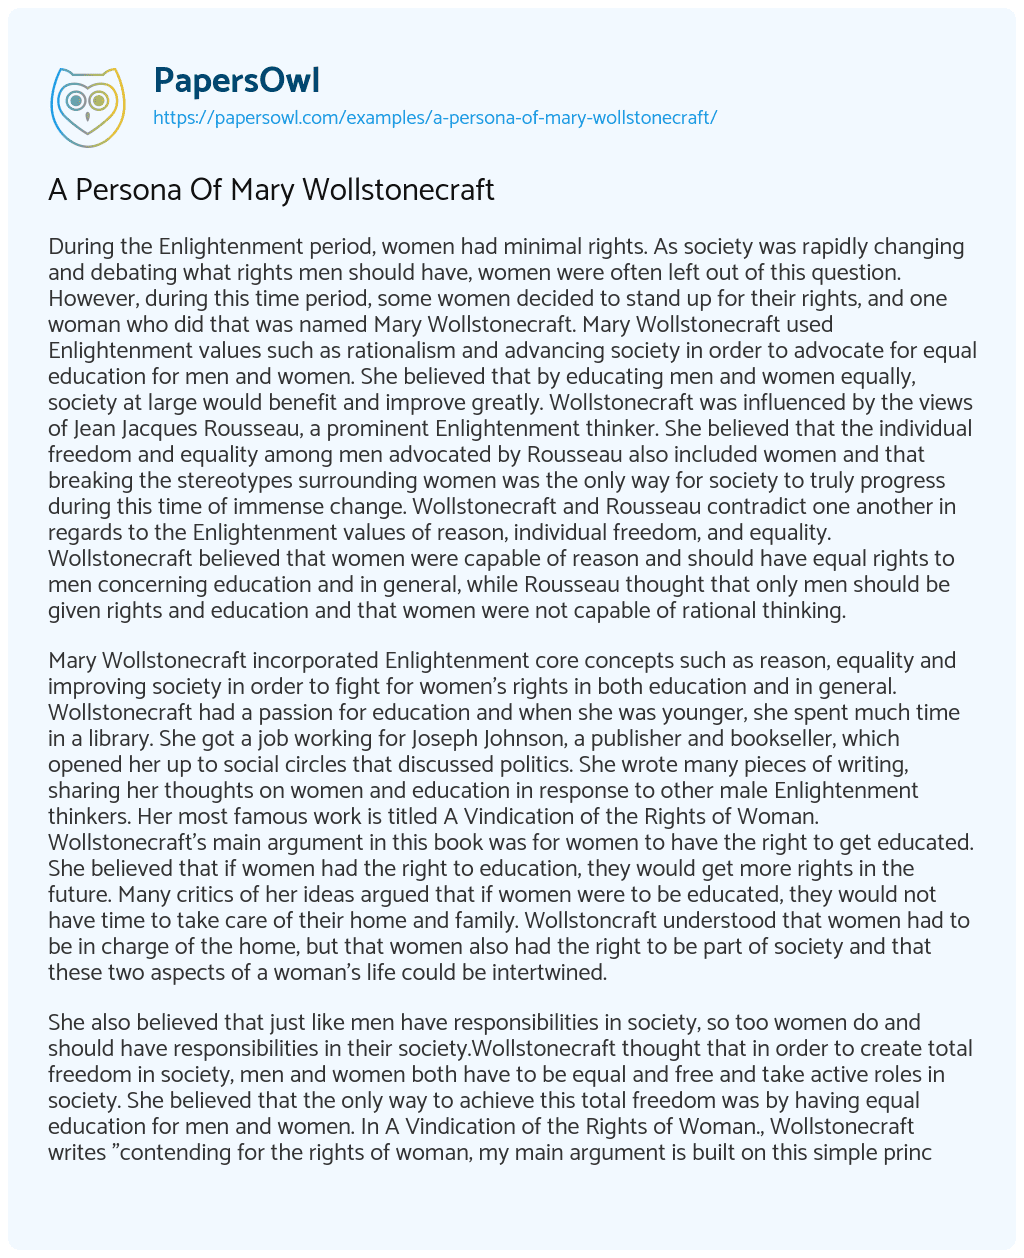 Essay on A Persona of Mary Wollstonecraft